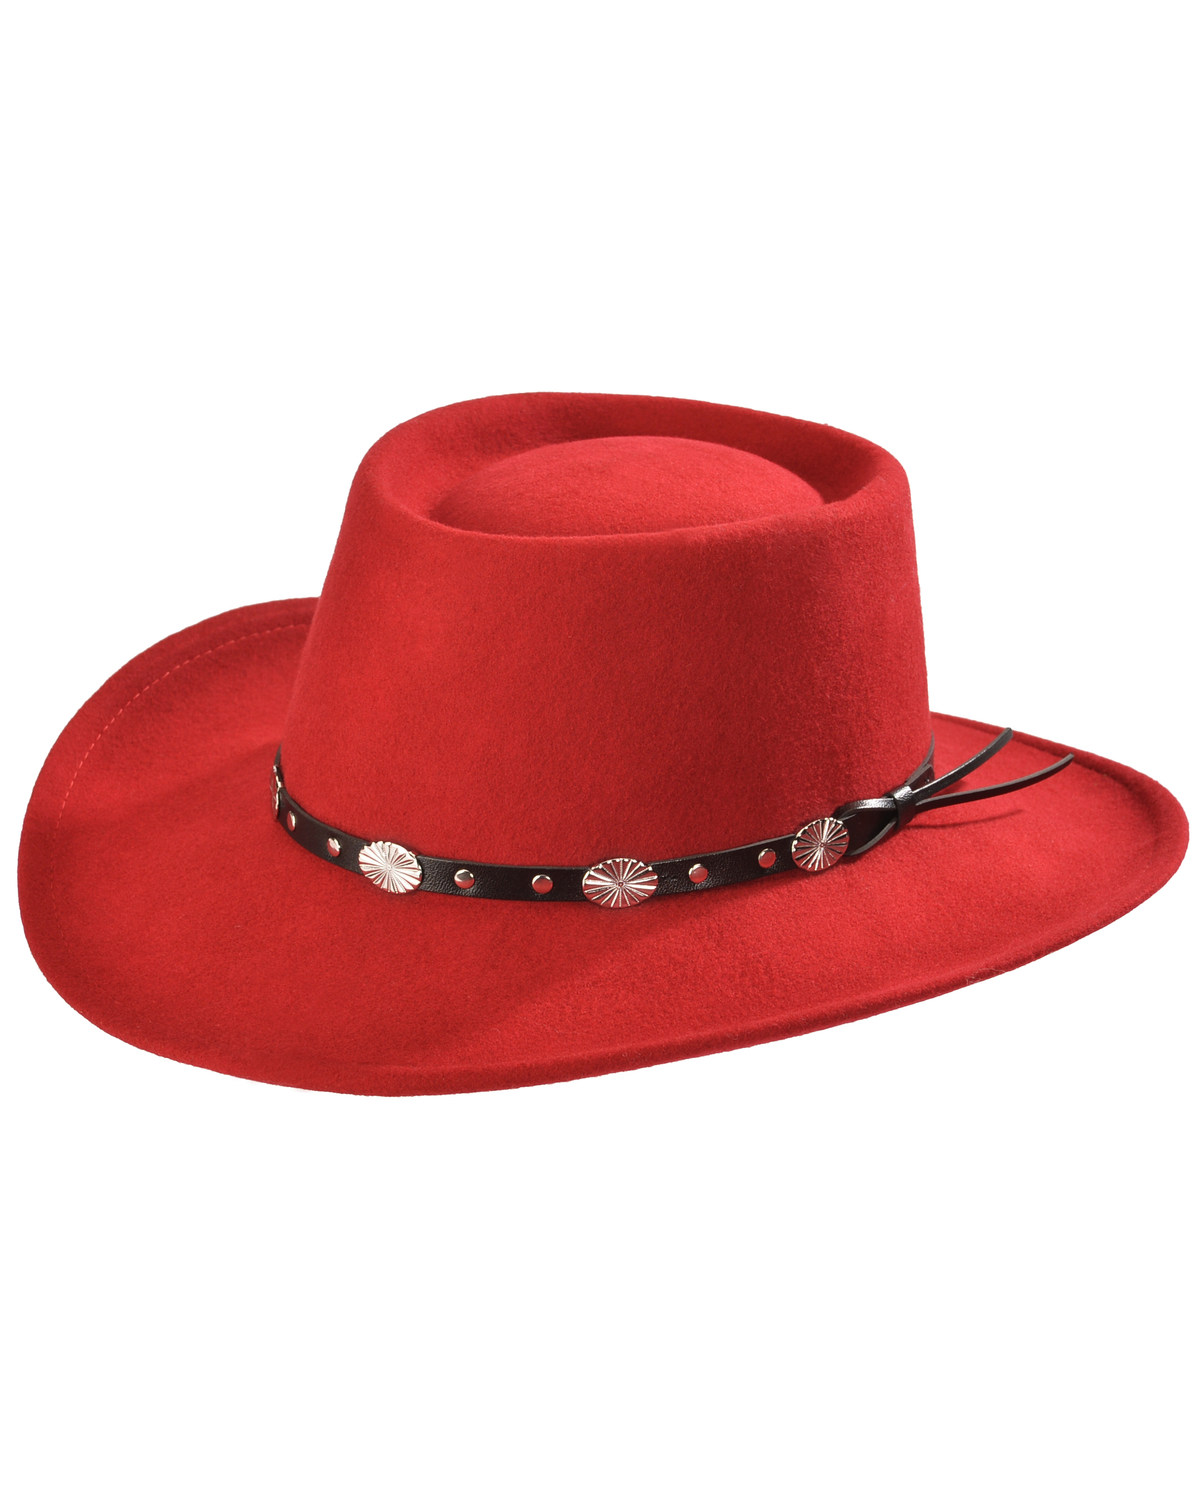 Silverado Women's Crushable Wool Gambler Hat